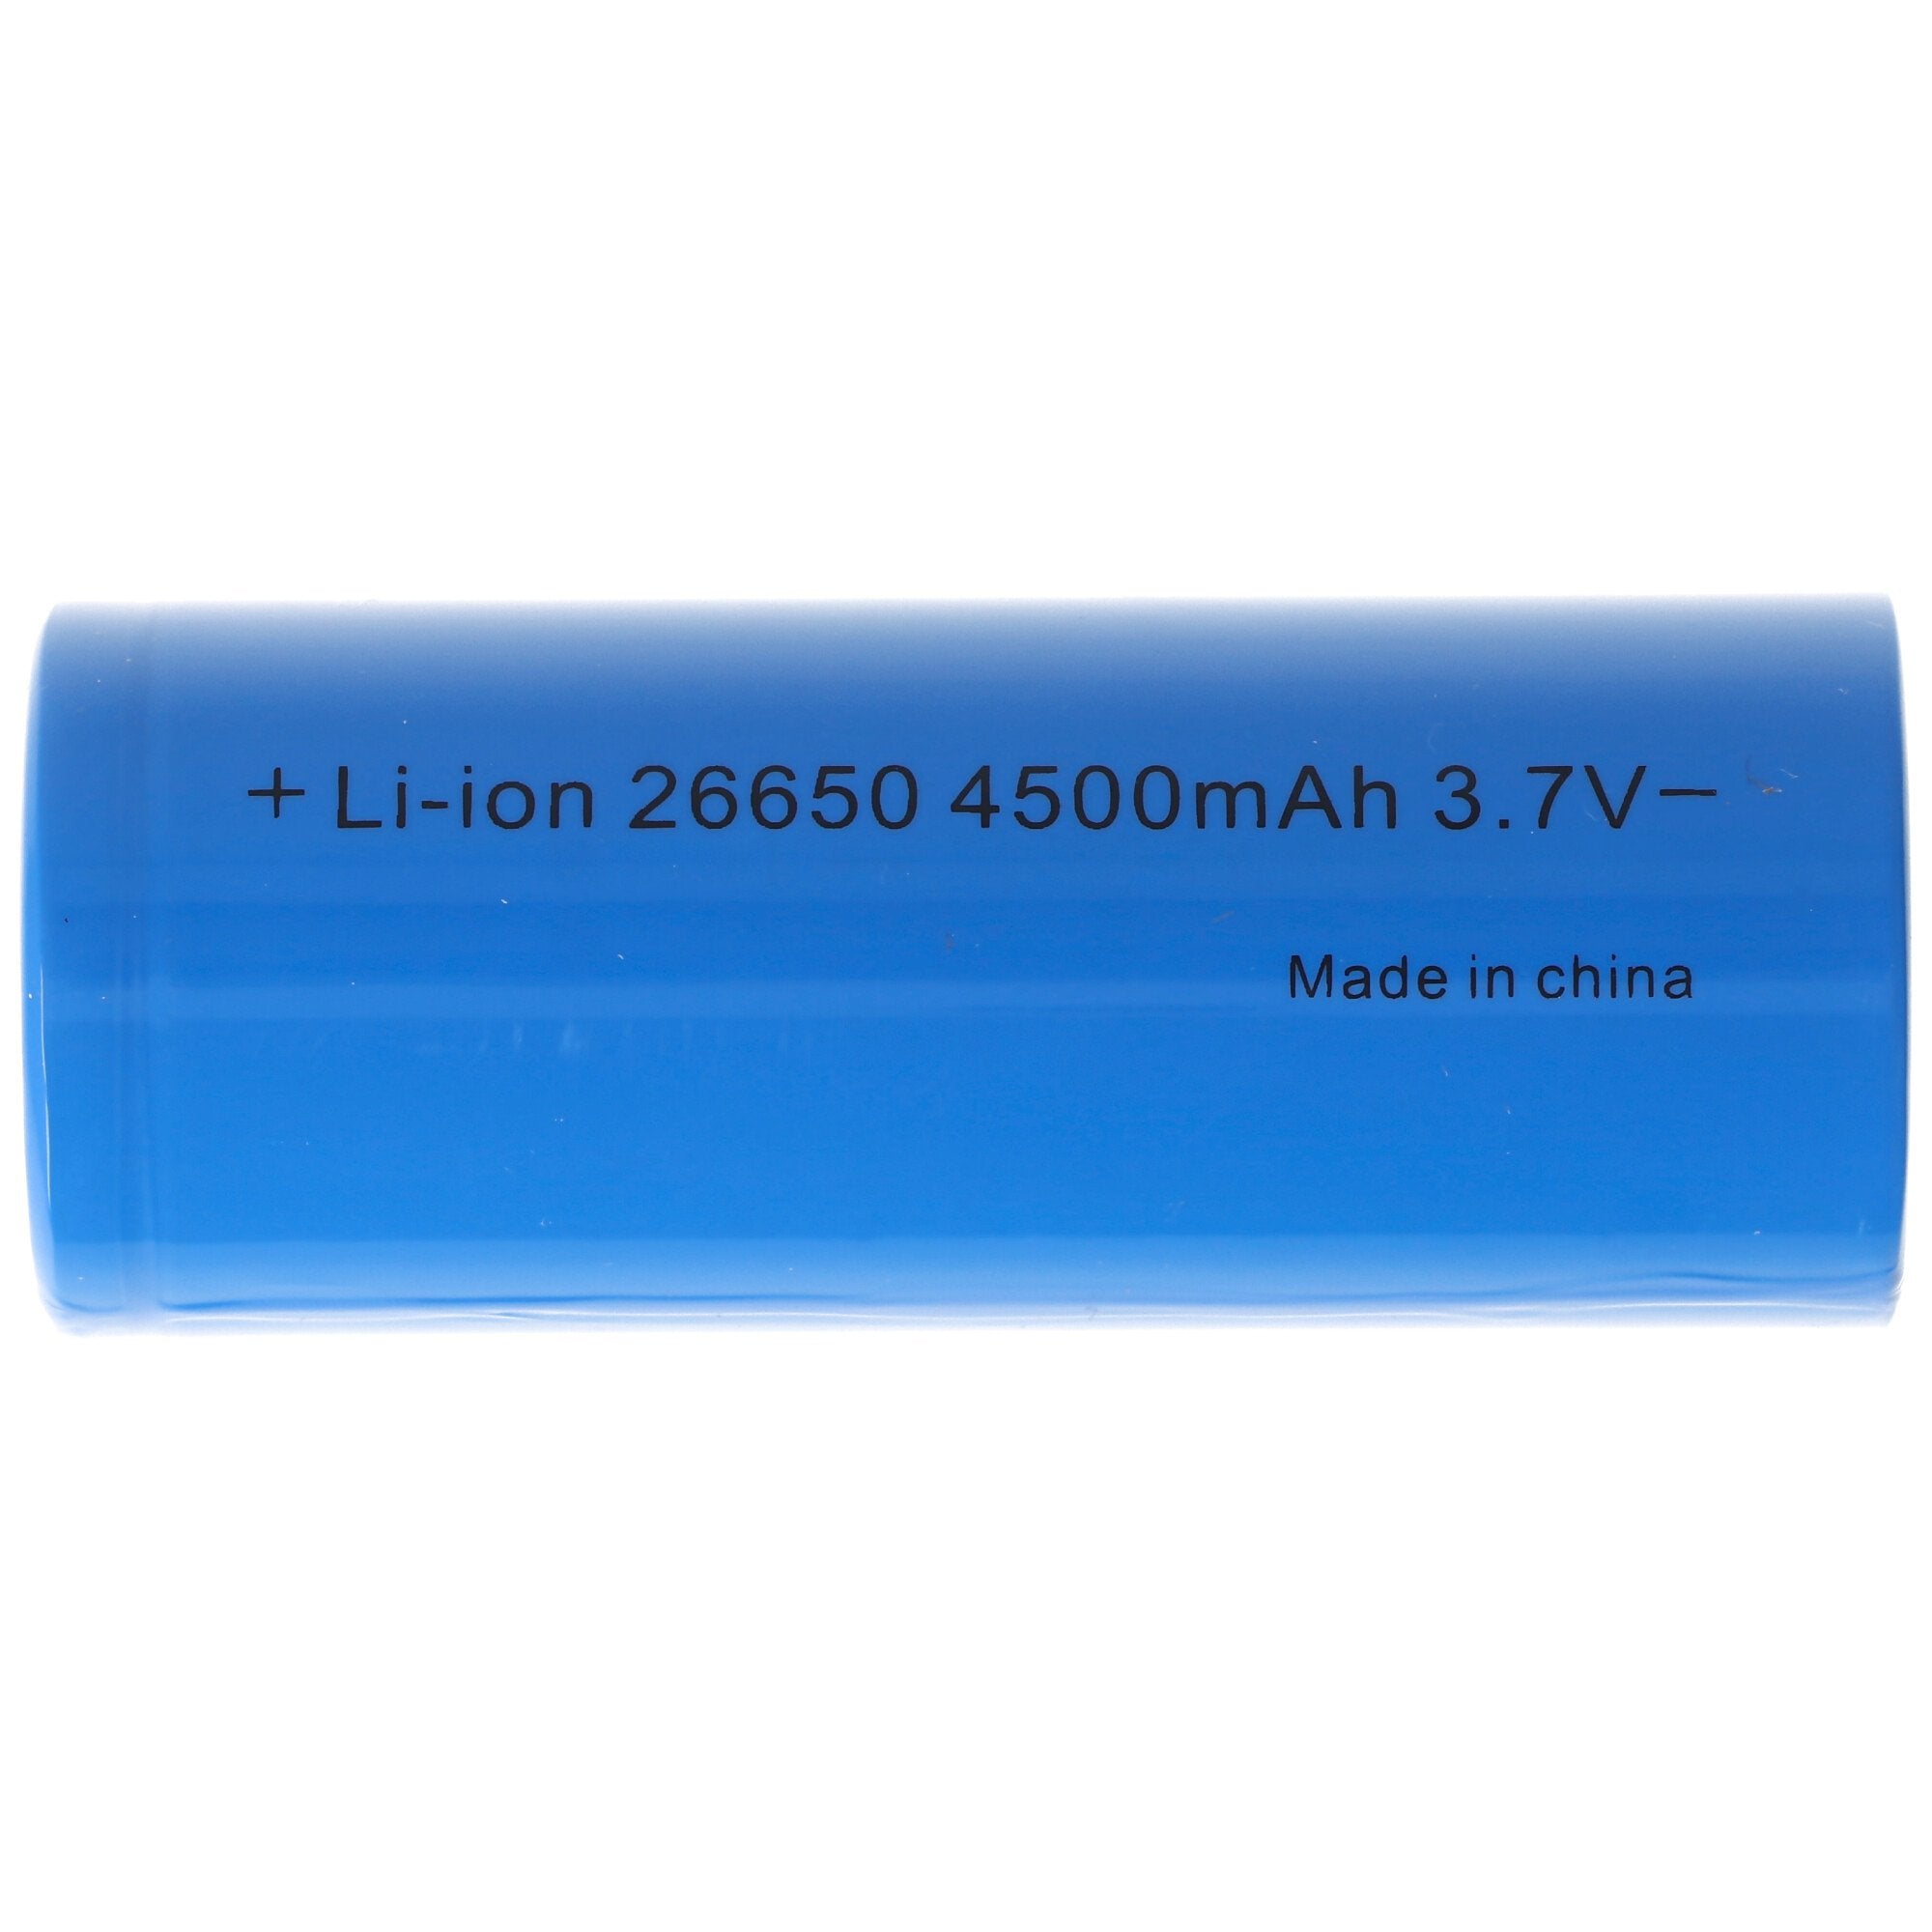 4500mAh Li-ion battery 26650A 3.6V, 3.7V, max. 15A discharge current, 26.5x65.2mm